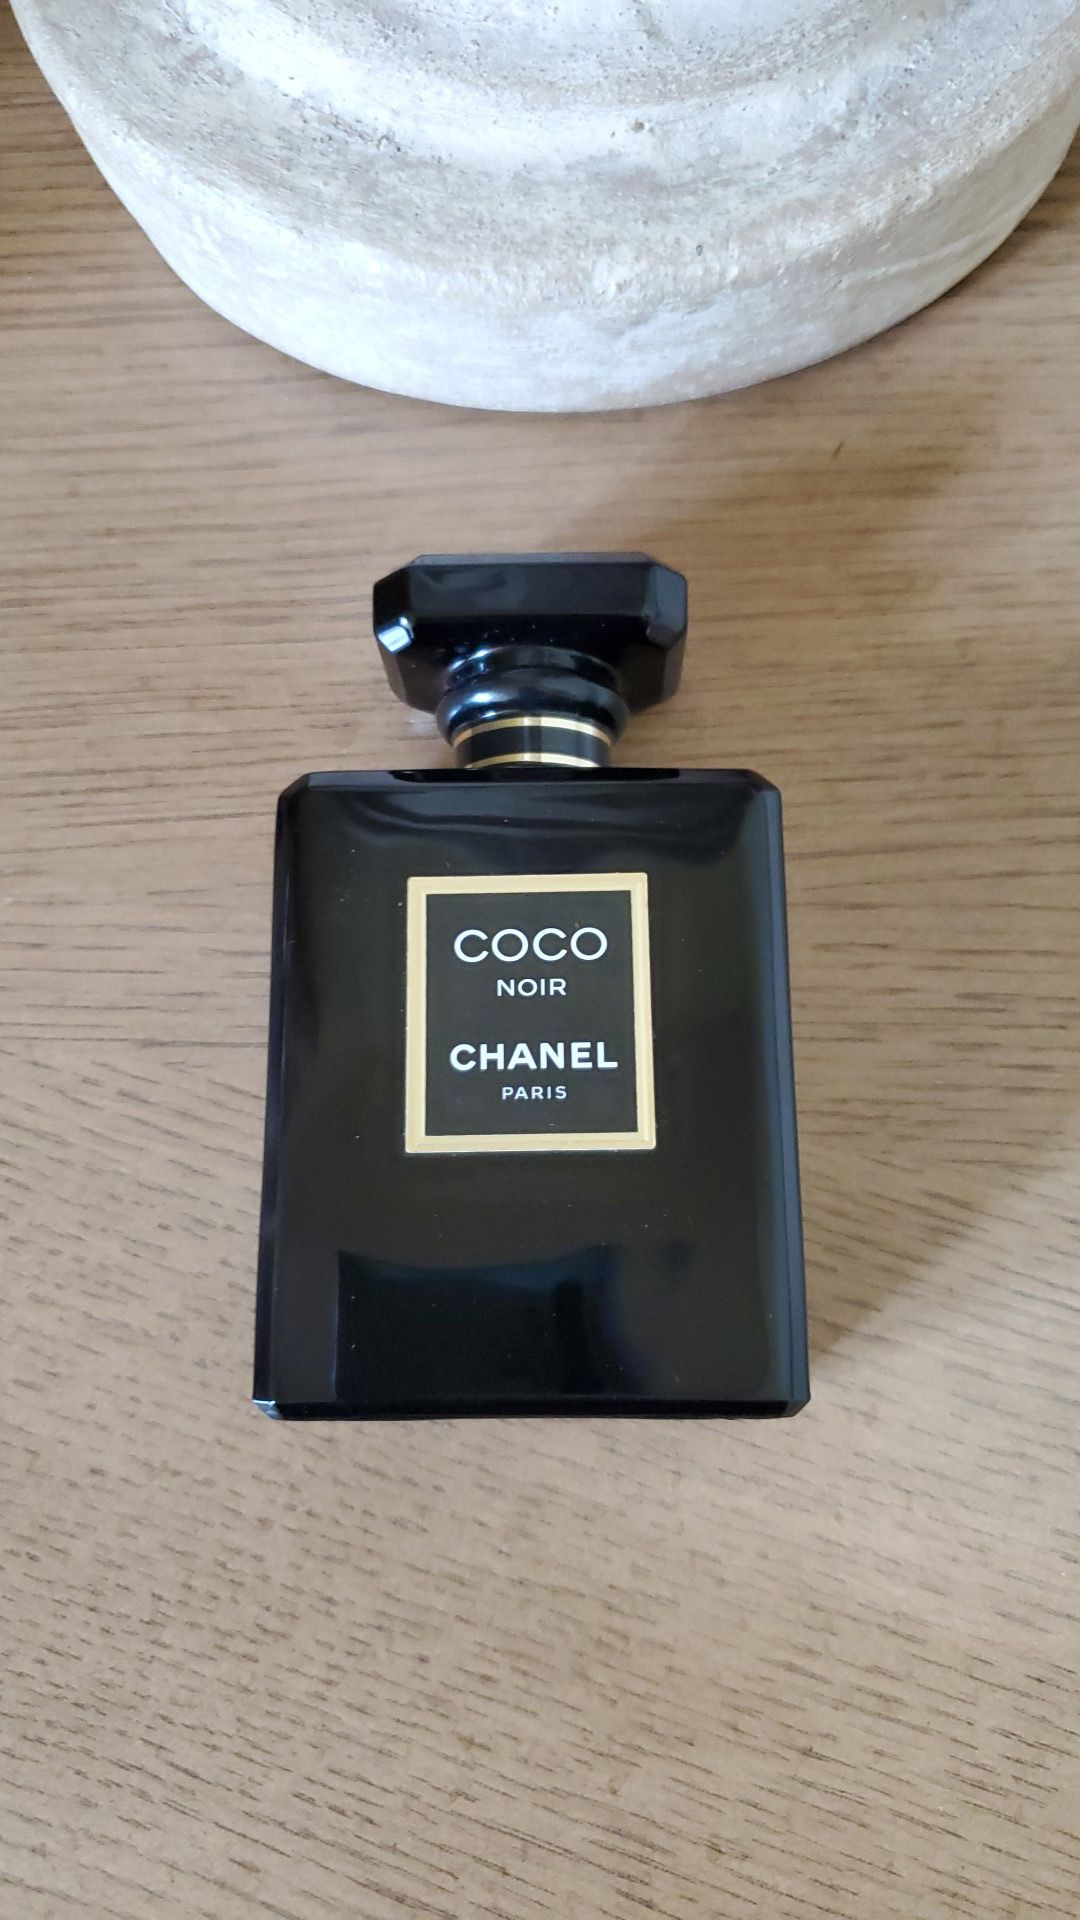 CHANEL "COCO NOIR" Perfume